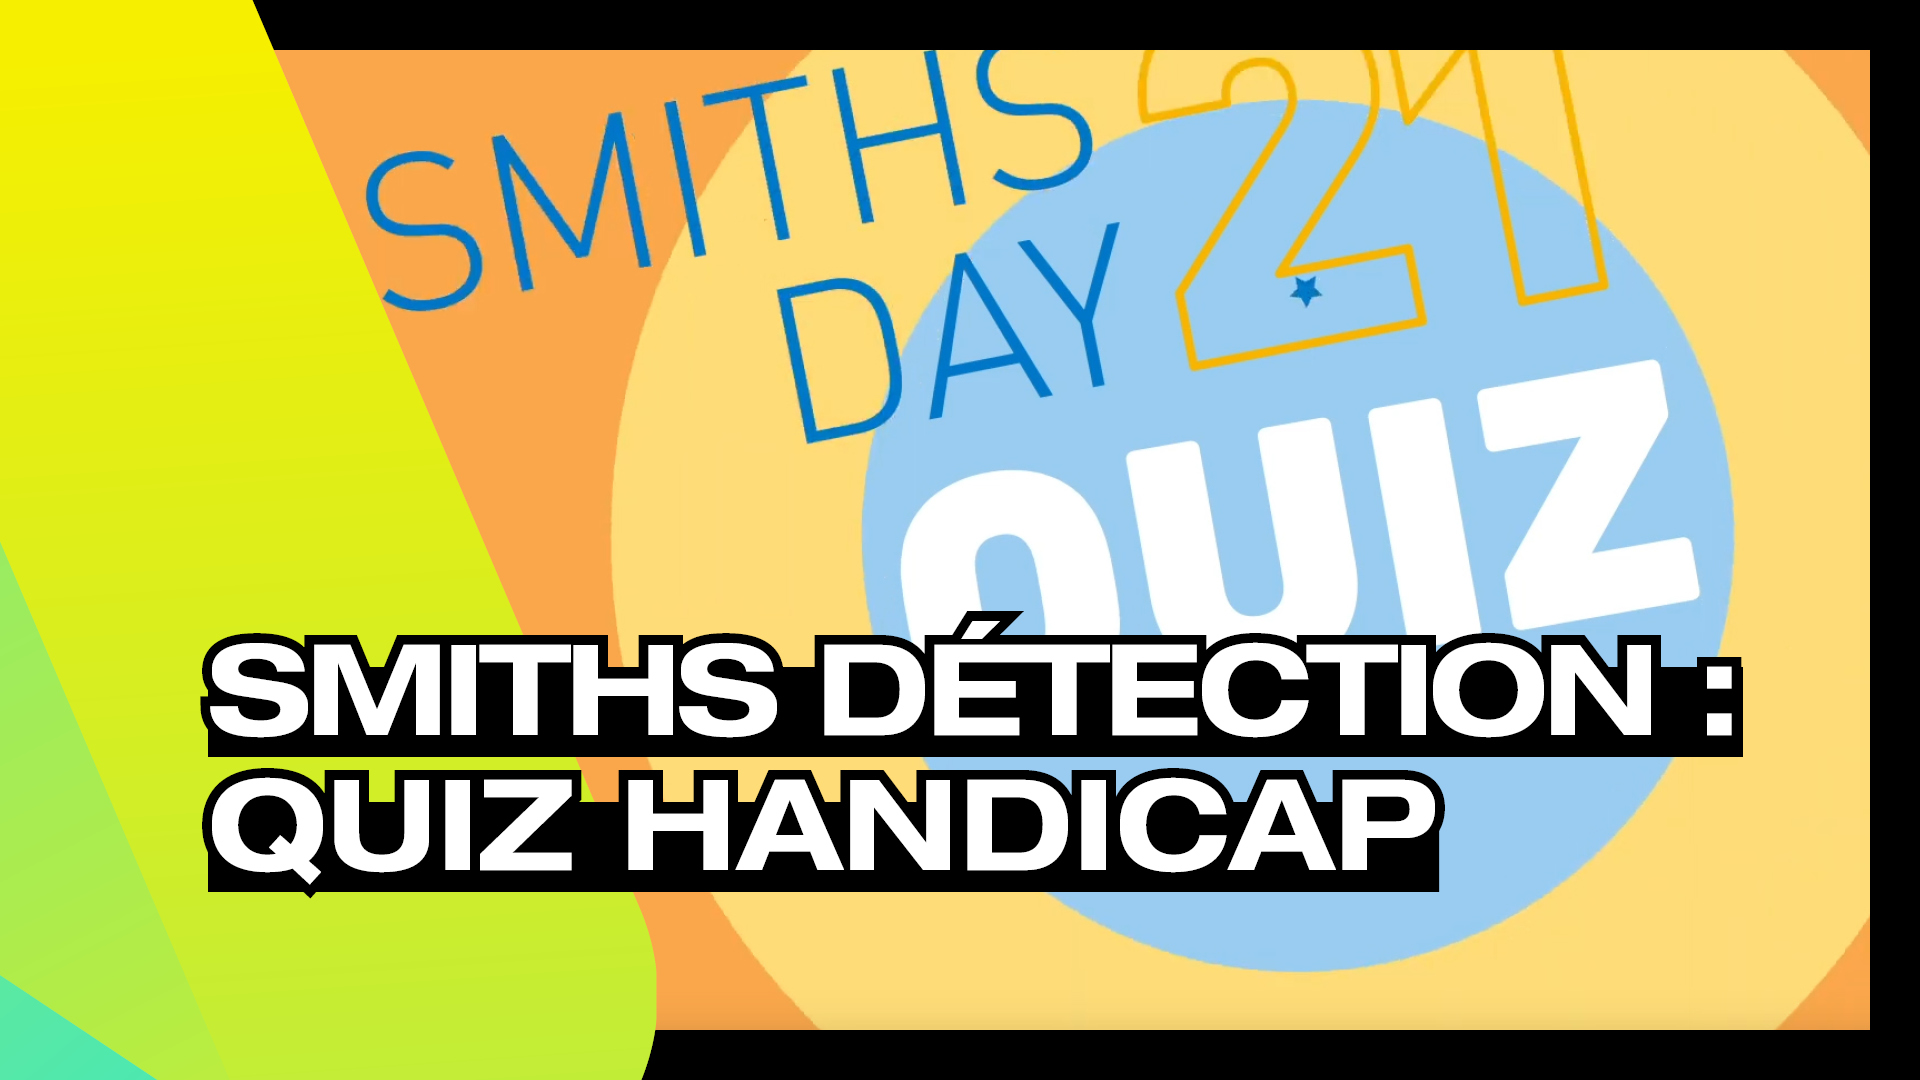 SMITHS DETECTION - Quiz handicap